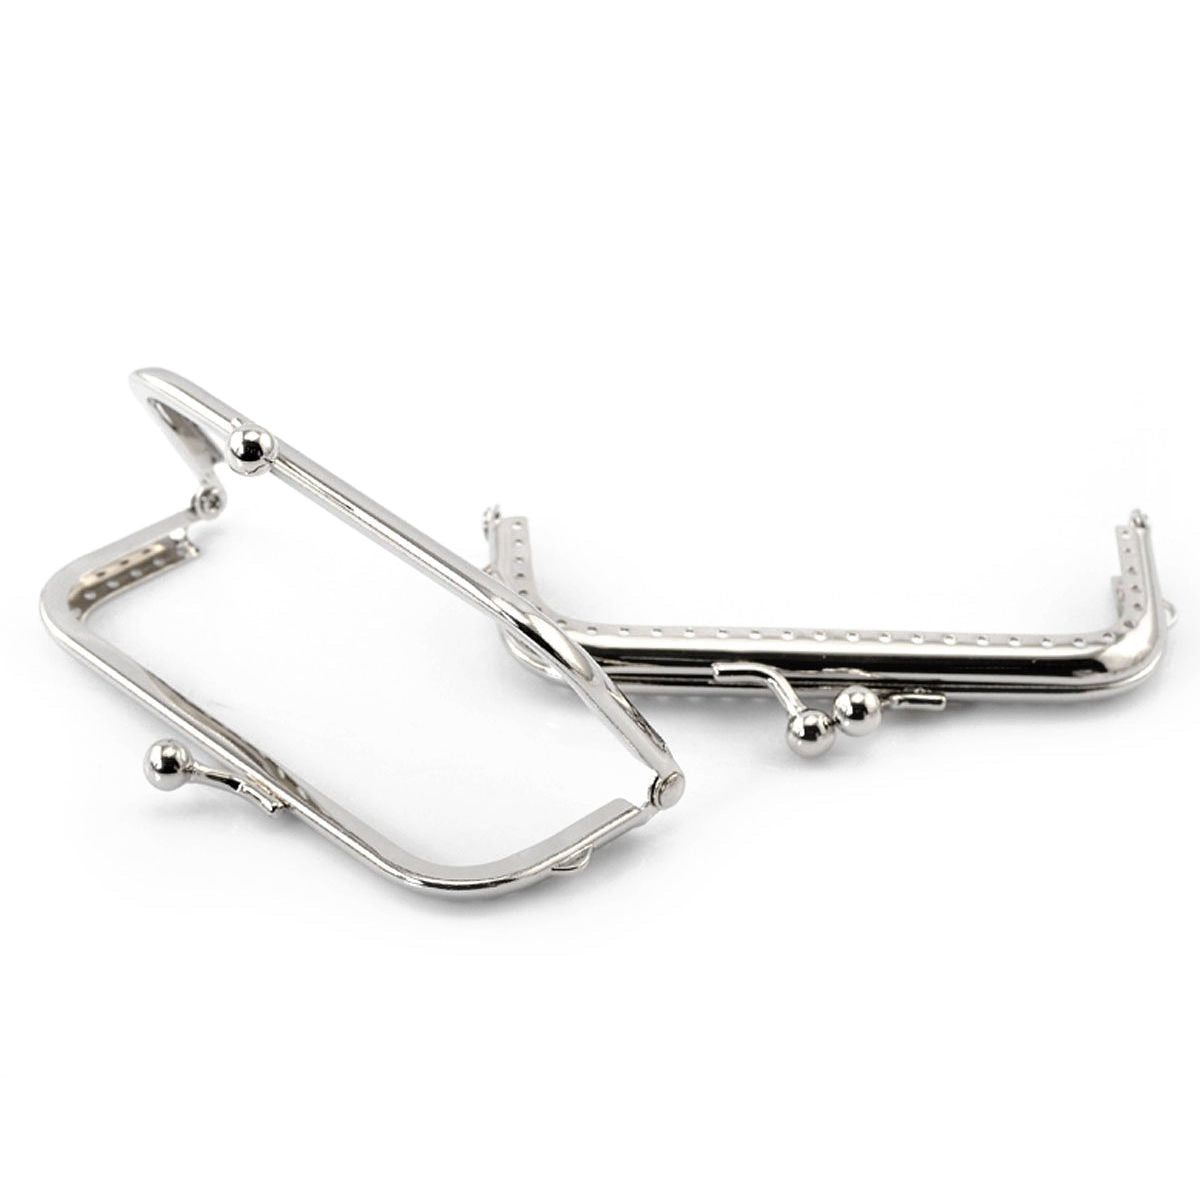 2 Silver Tone Purse Bag Metal Frame Kiss Clasp Lock 10.5x6cm - ebowsos